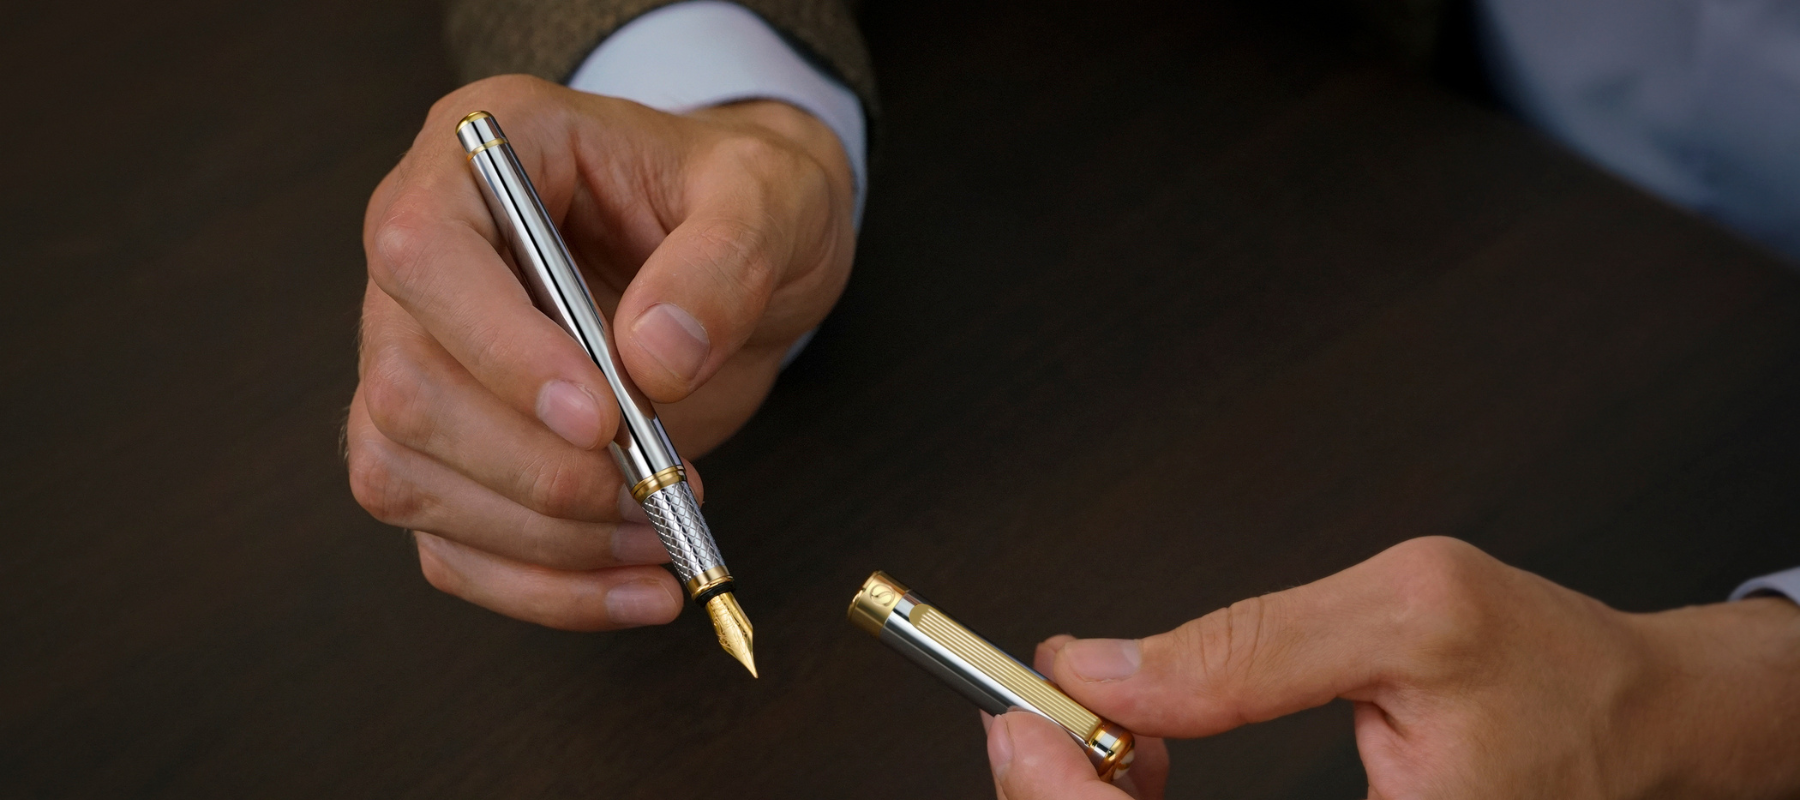 Scriveiner Gold Rollerball Pen - Stunning Luxury Pen with 24K Gold Finish, Schmidt Ink Refill, Best Roller Ball Pen Gift Set for